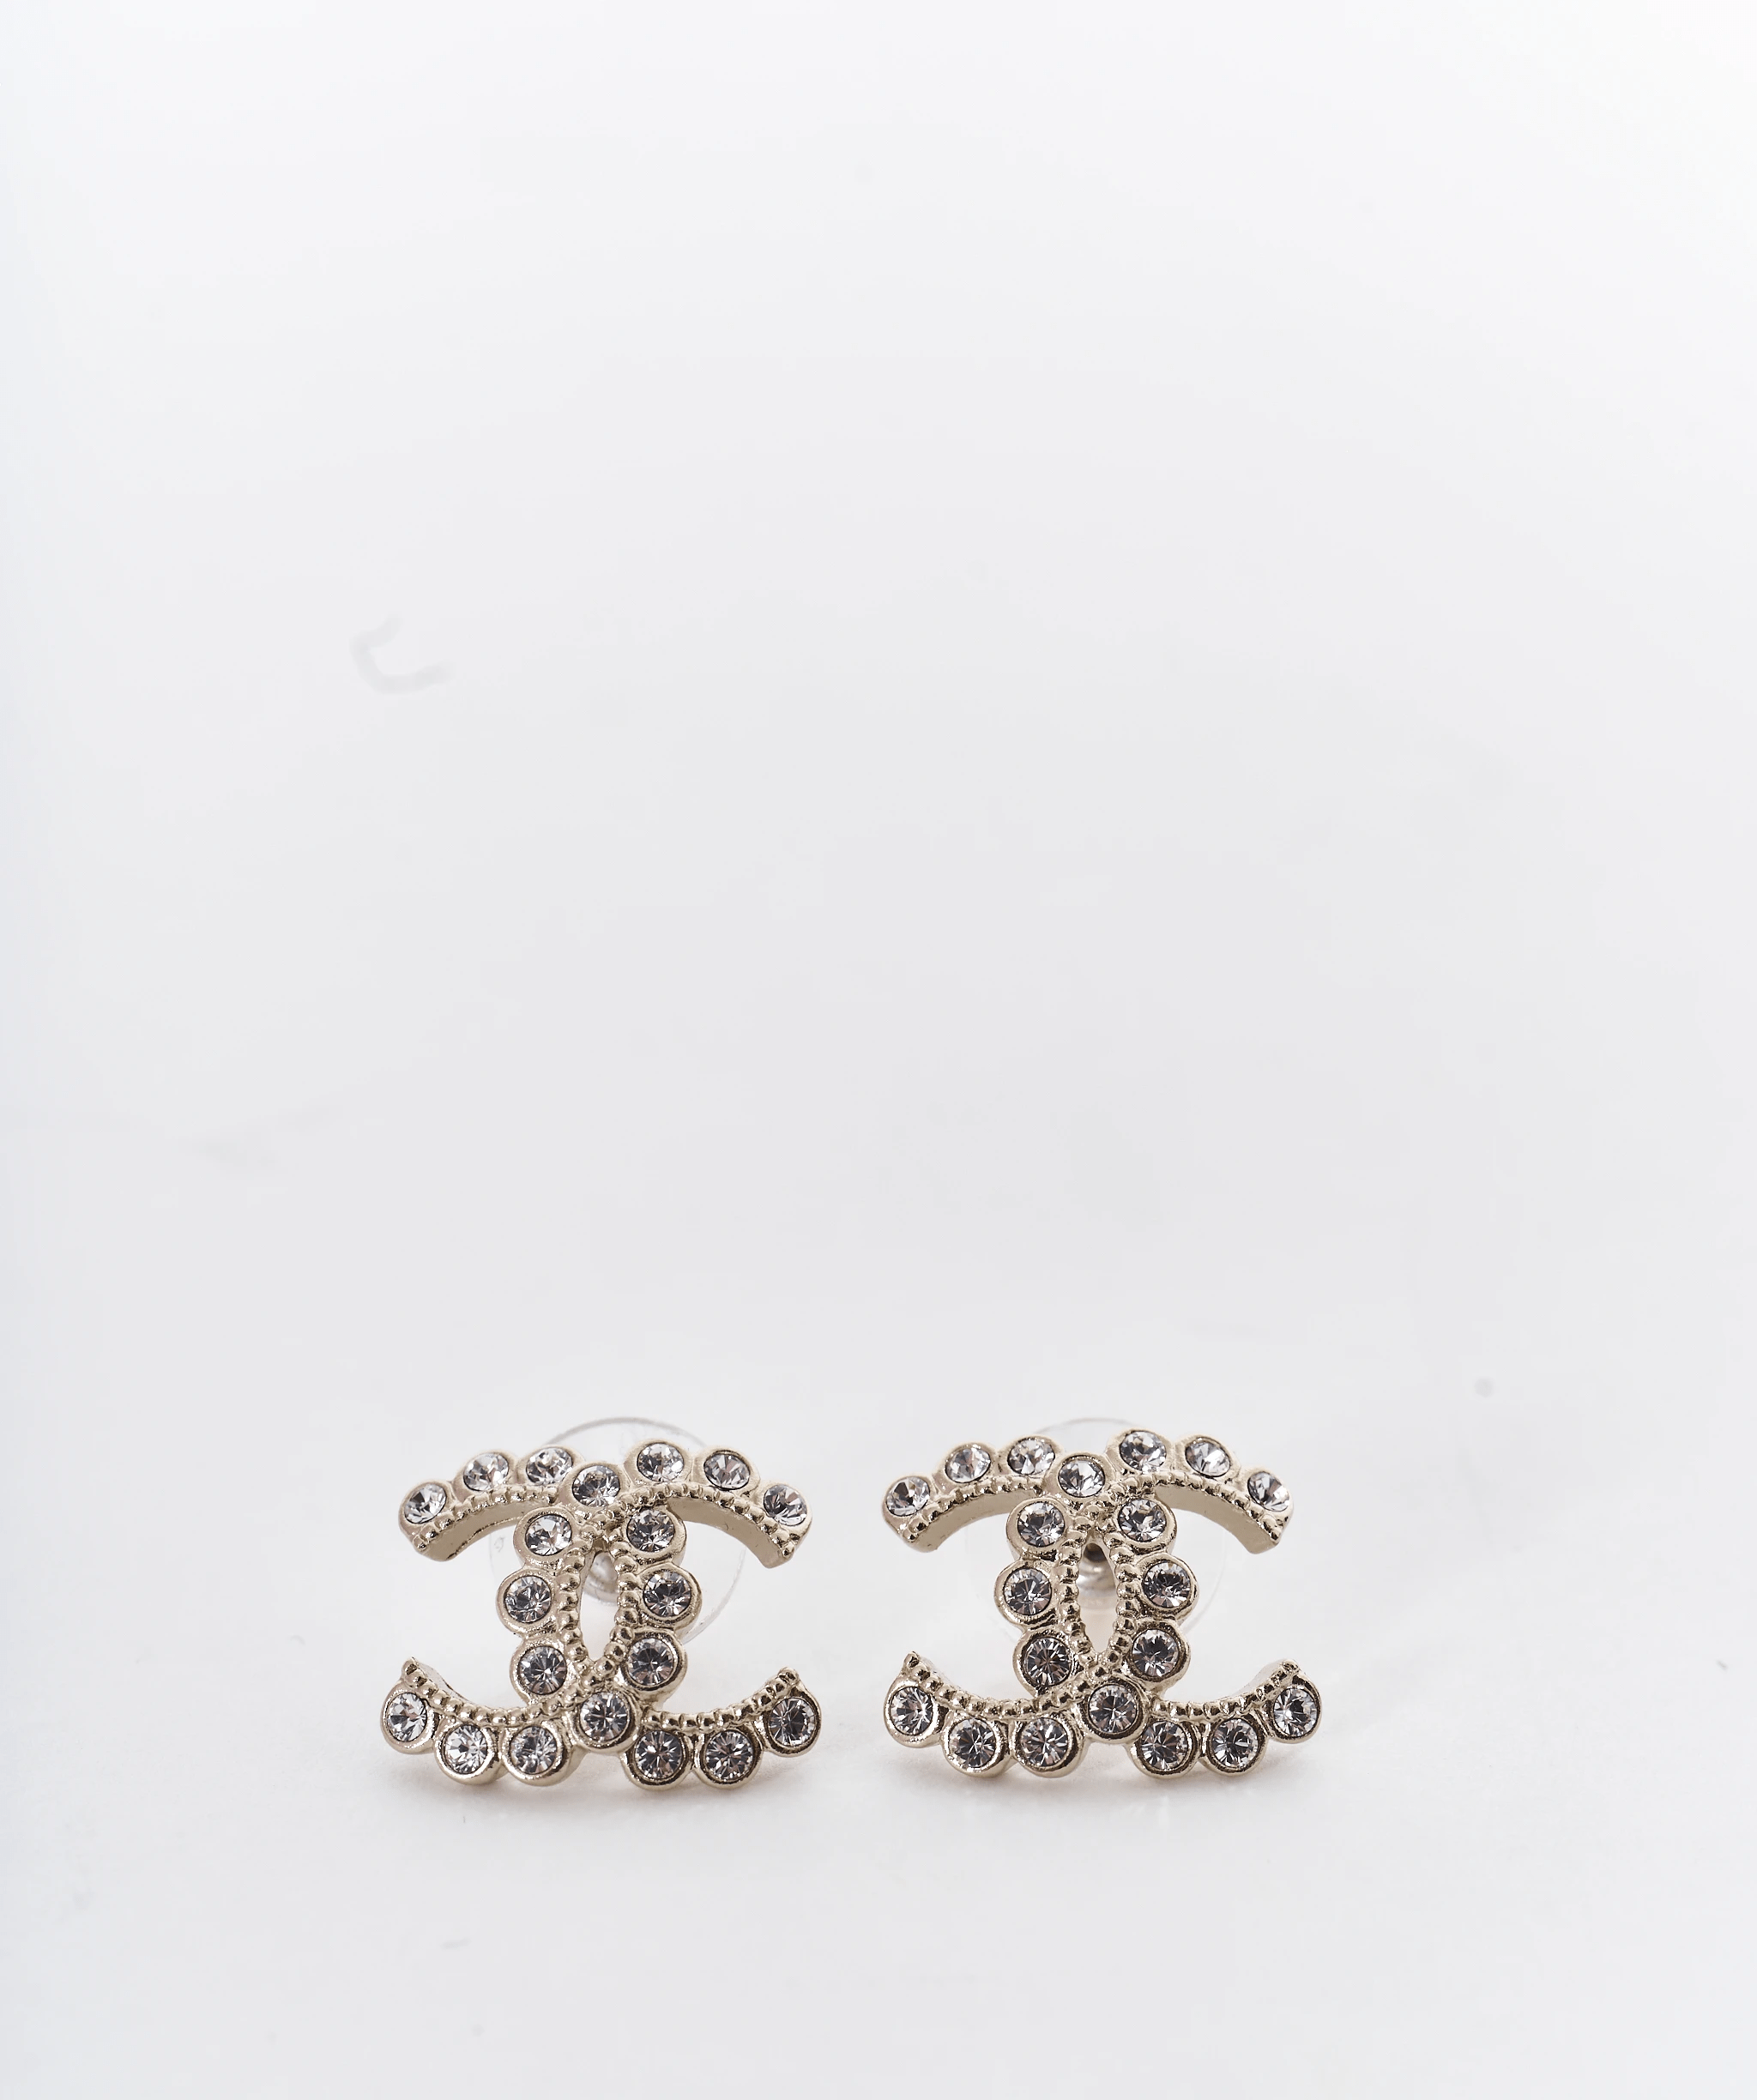 Chanel Chanel CC crystal pronounced earrings